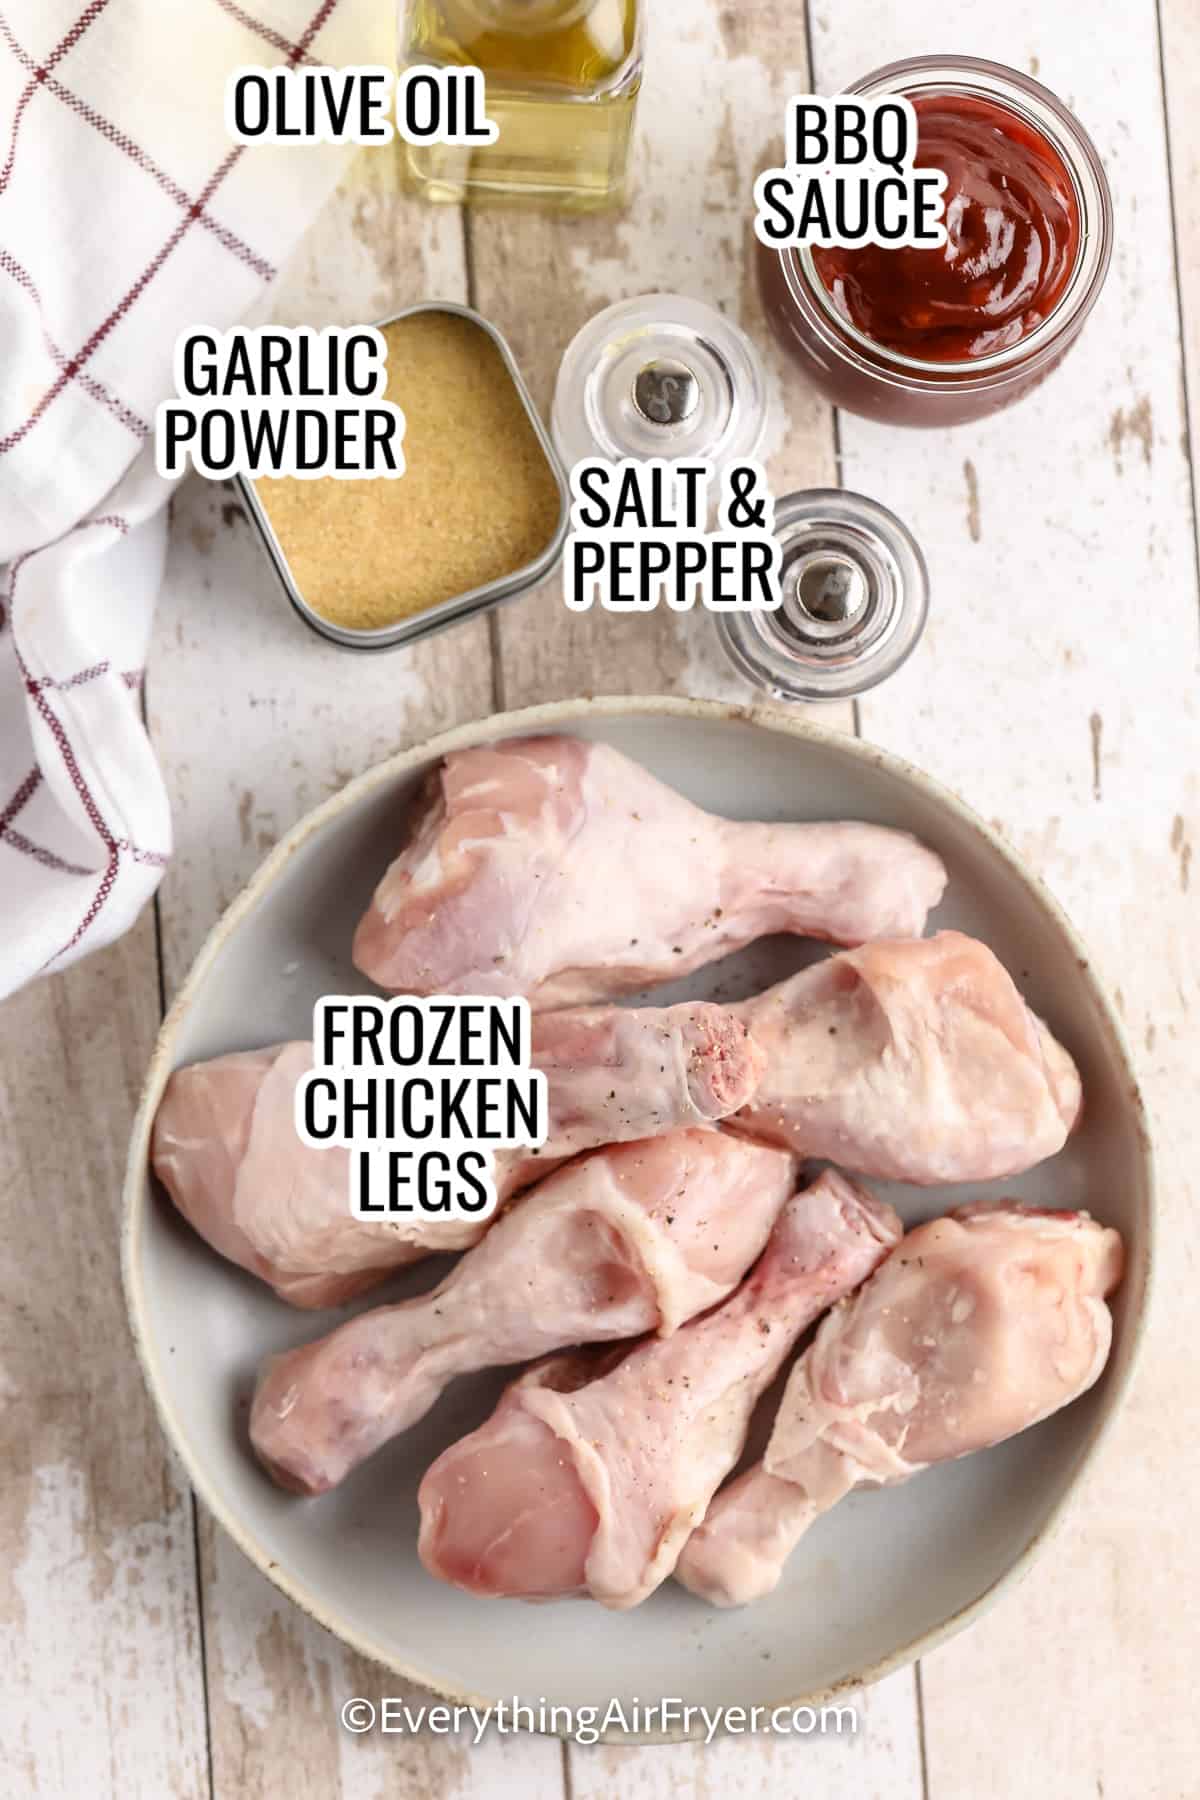 ingredients assembled to make air fryer chicken drumsticks from frozen, including frozen chicken legs, garlic powder, olive oil, bbq sauce, and salt and pepper